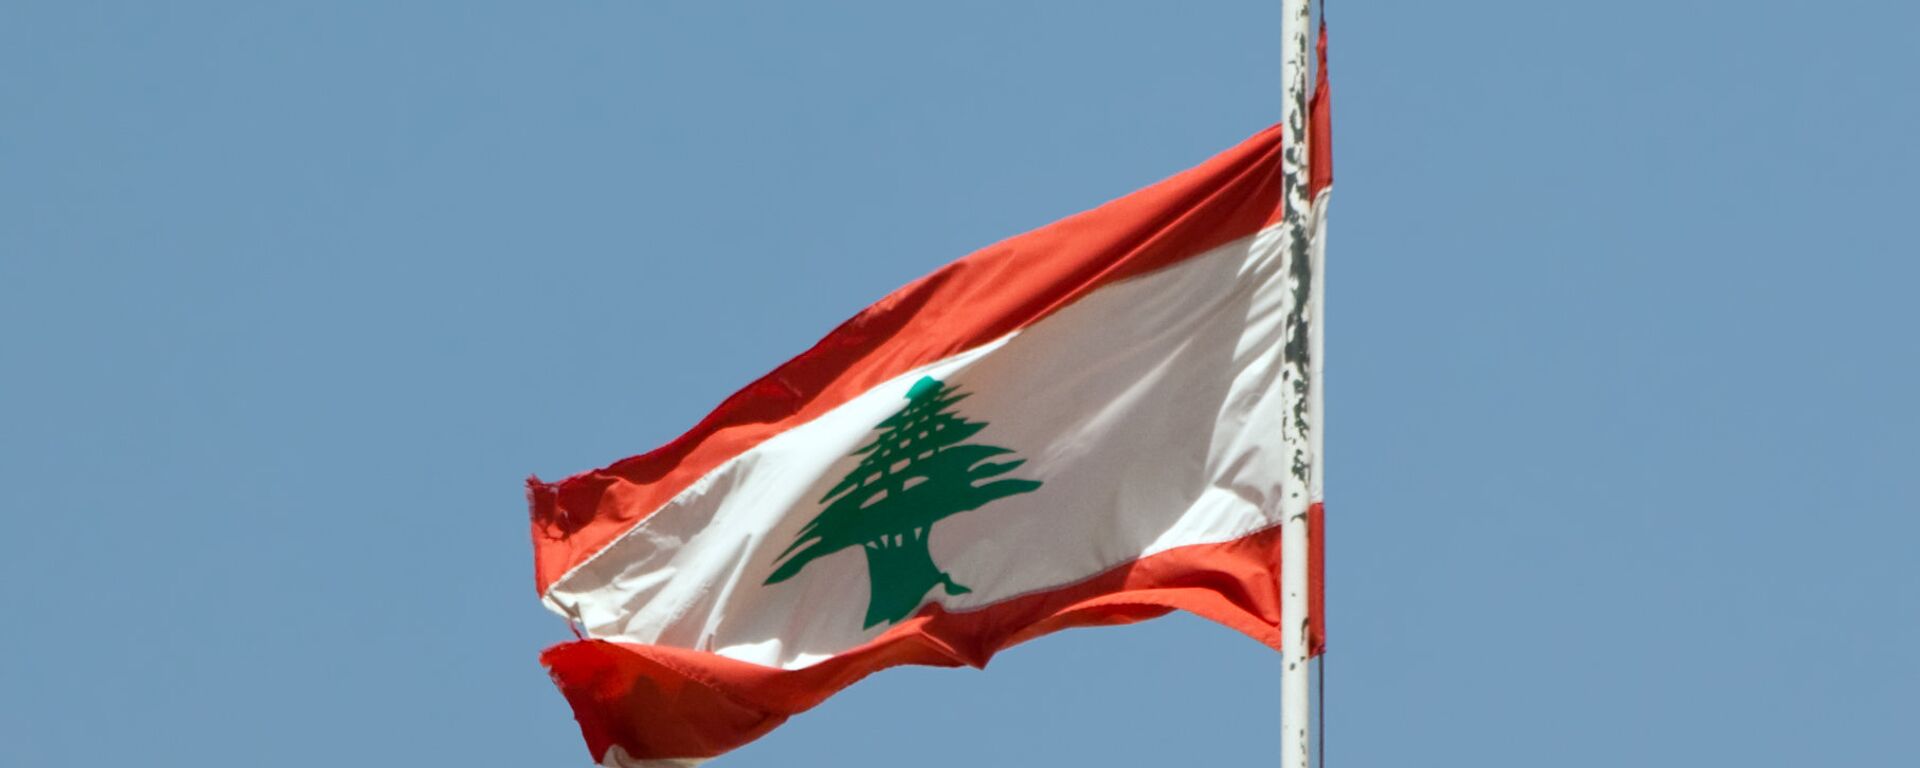 Bandera del Líbano - Sputnik Mundo, 1920, 29.10.2021